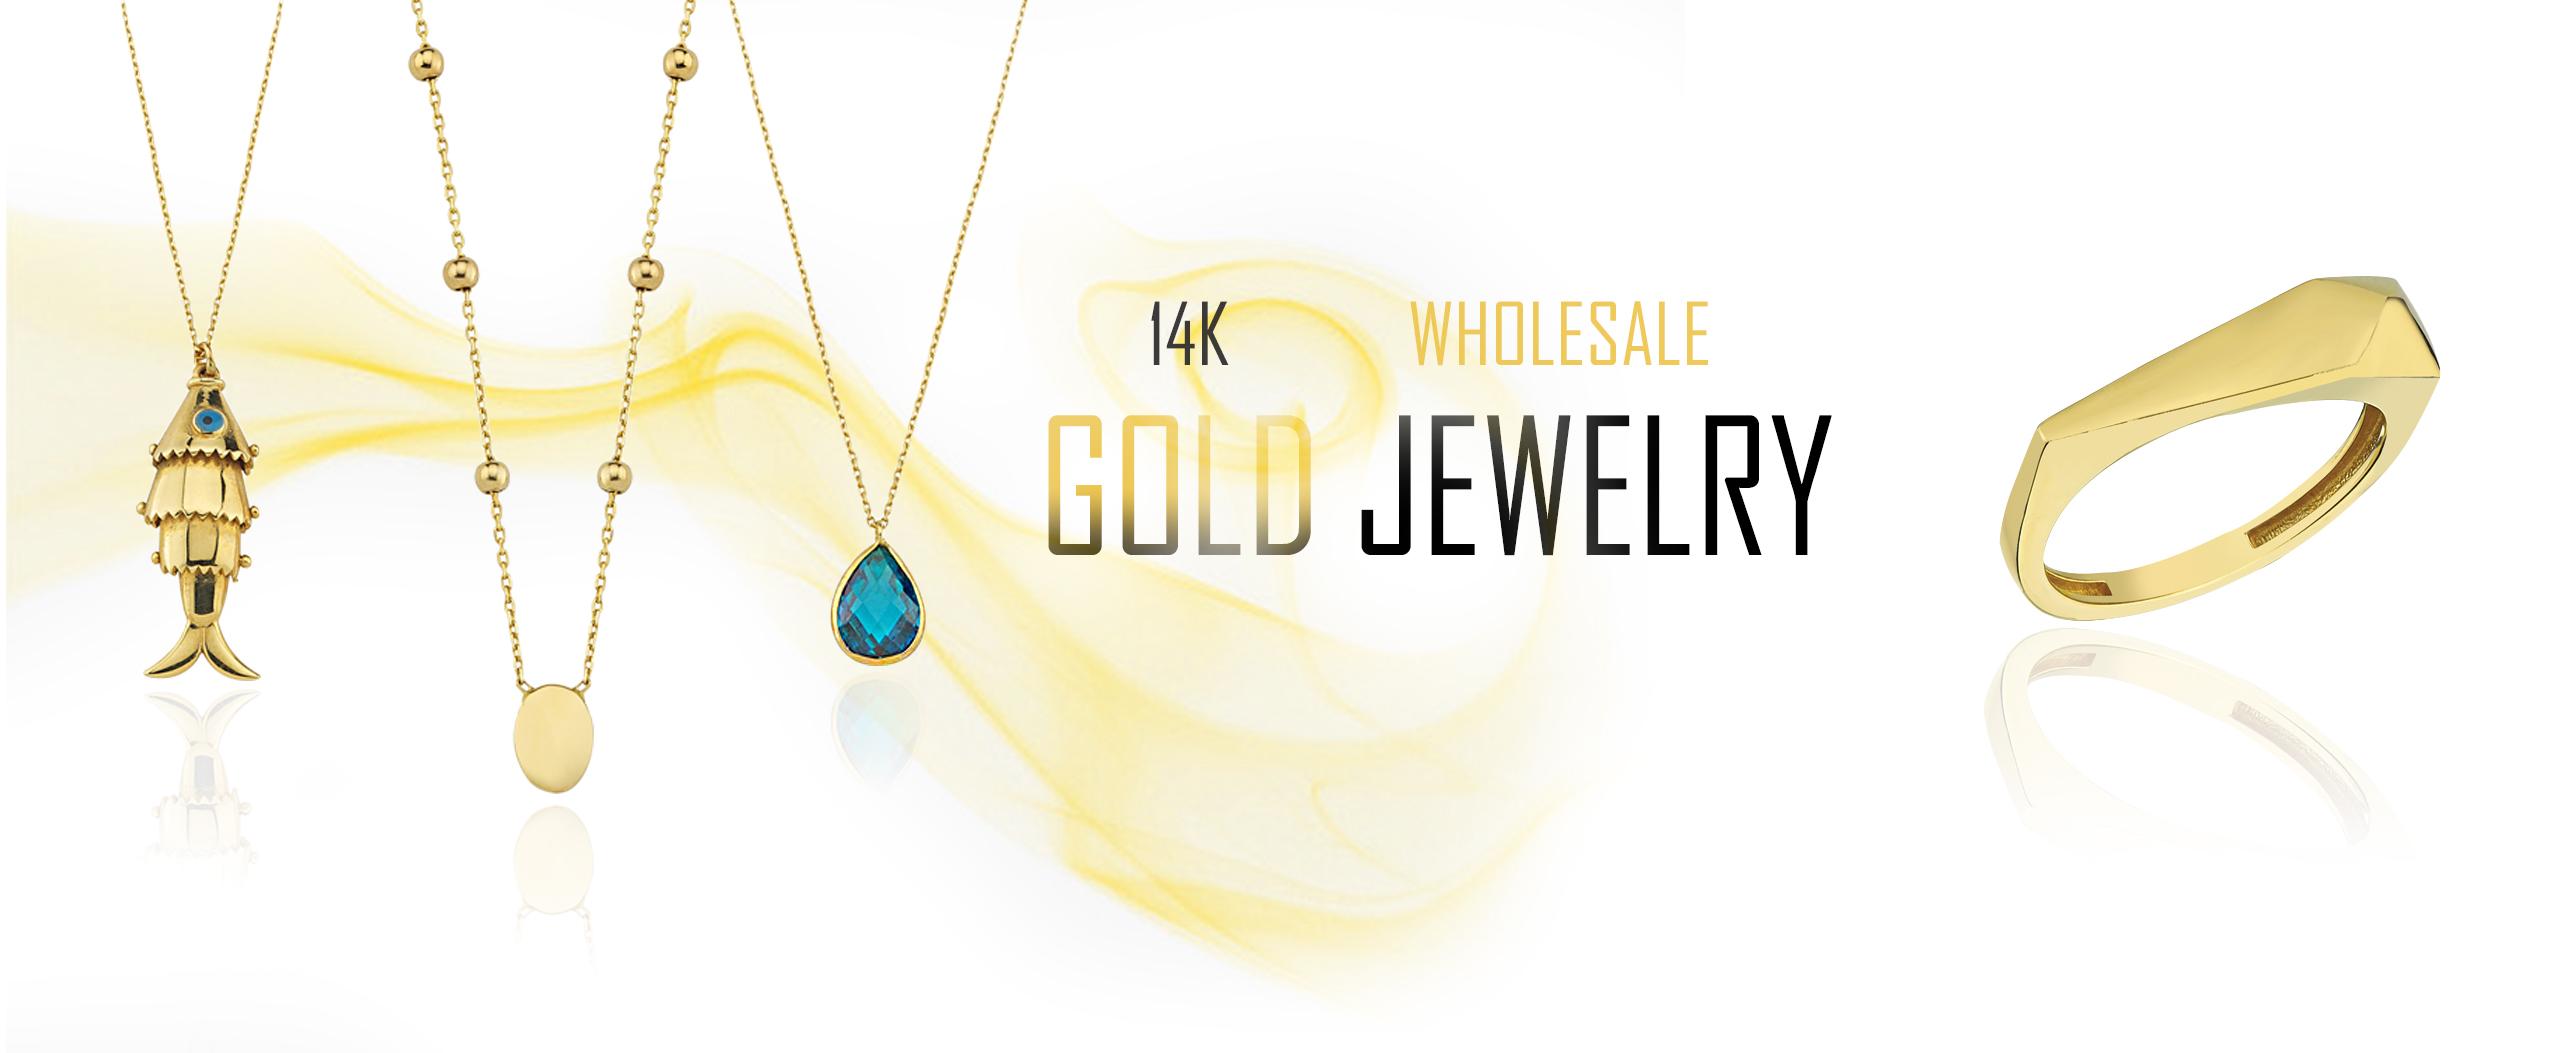 14K Gold jewellery